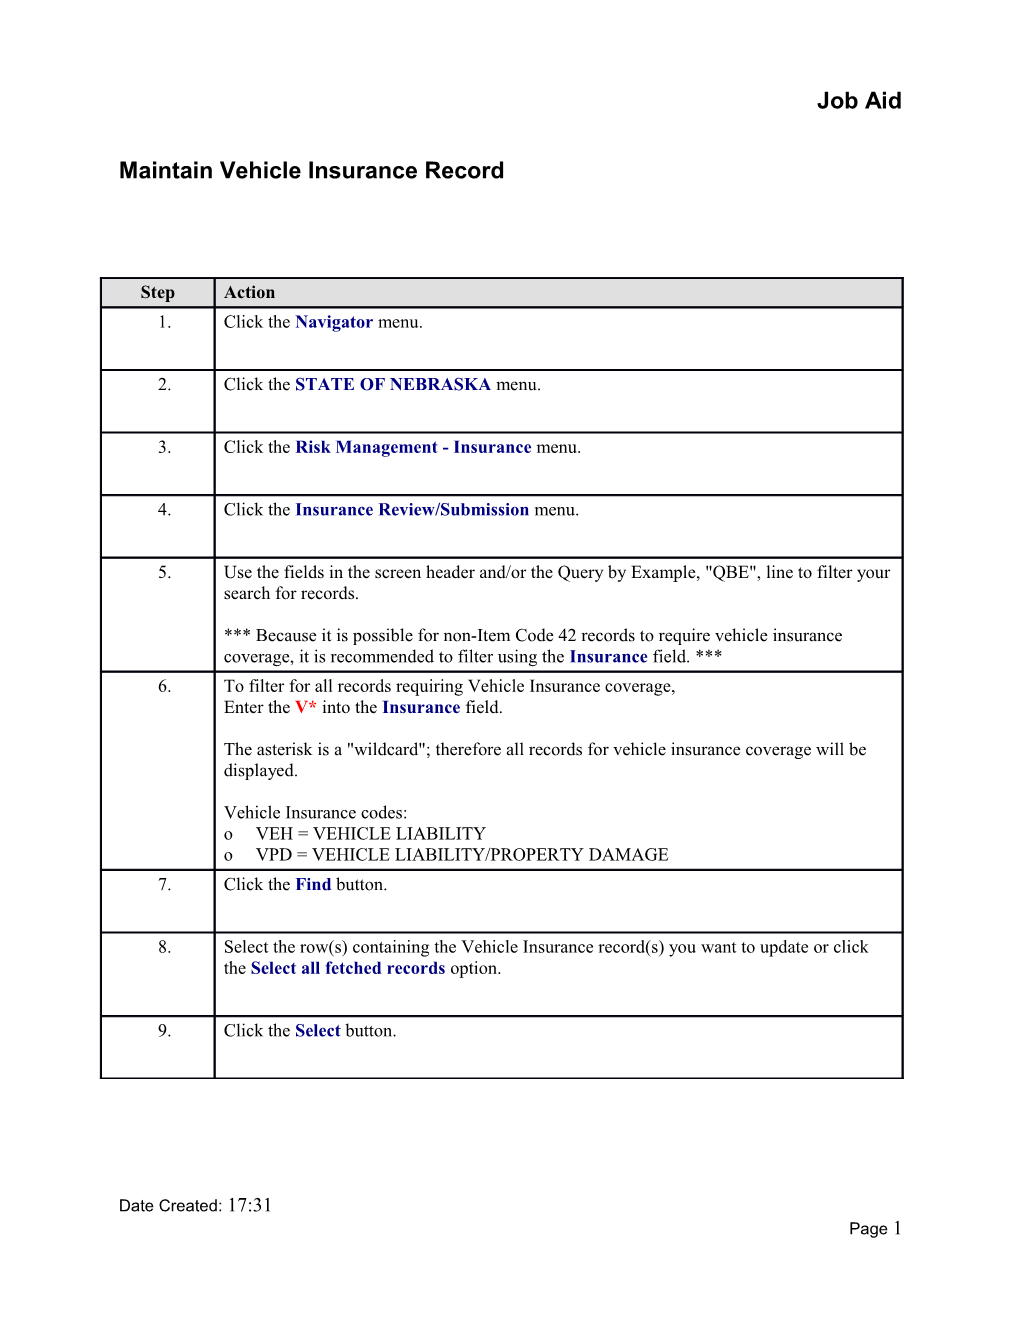 Maintain Vehicle Insurance Record